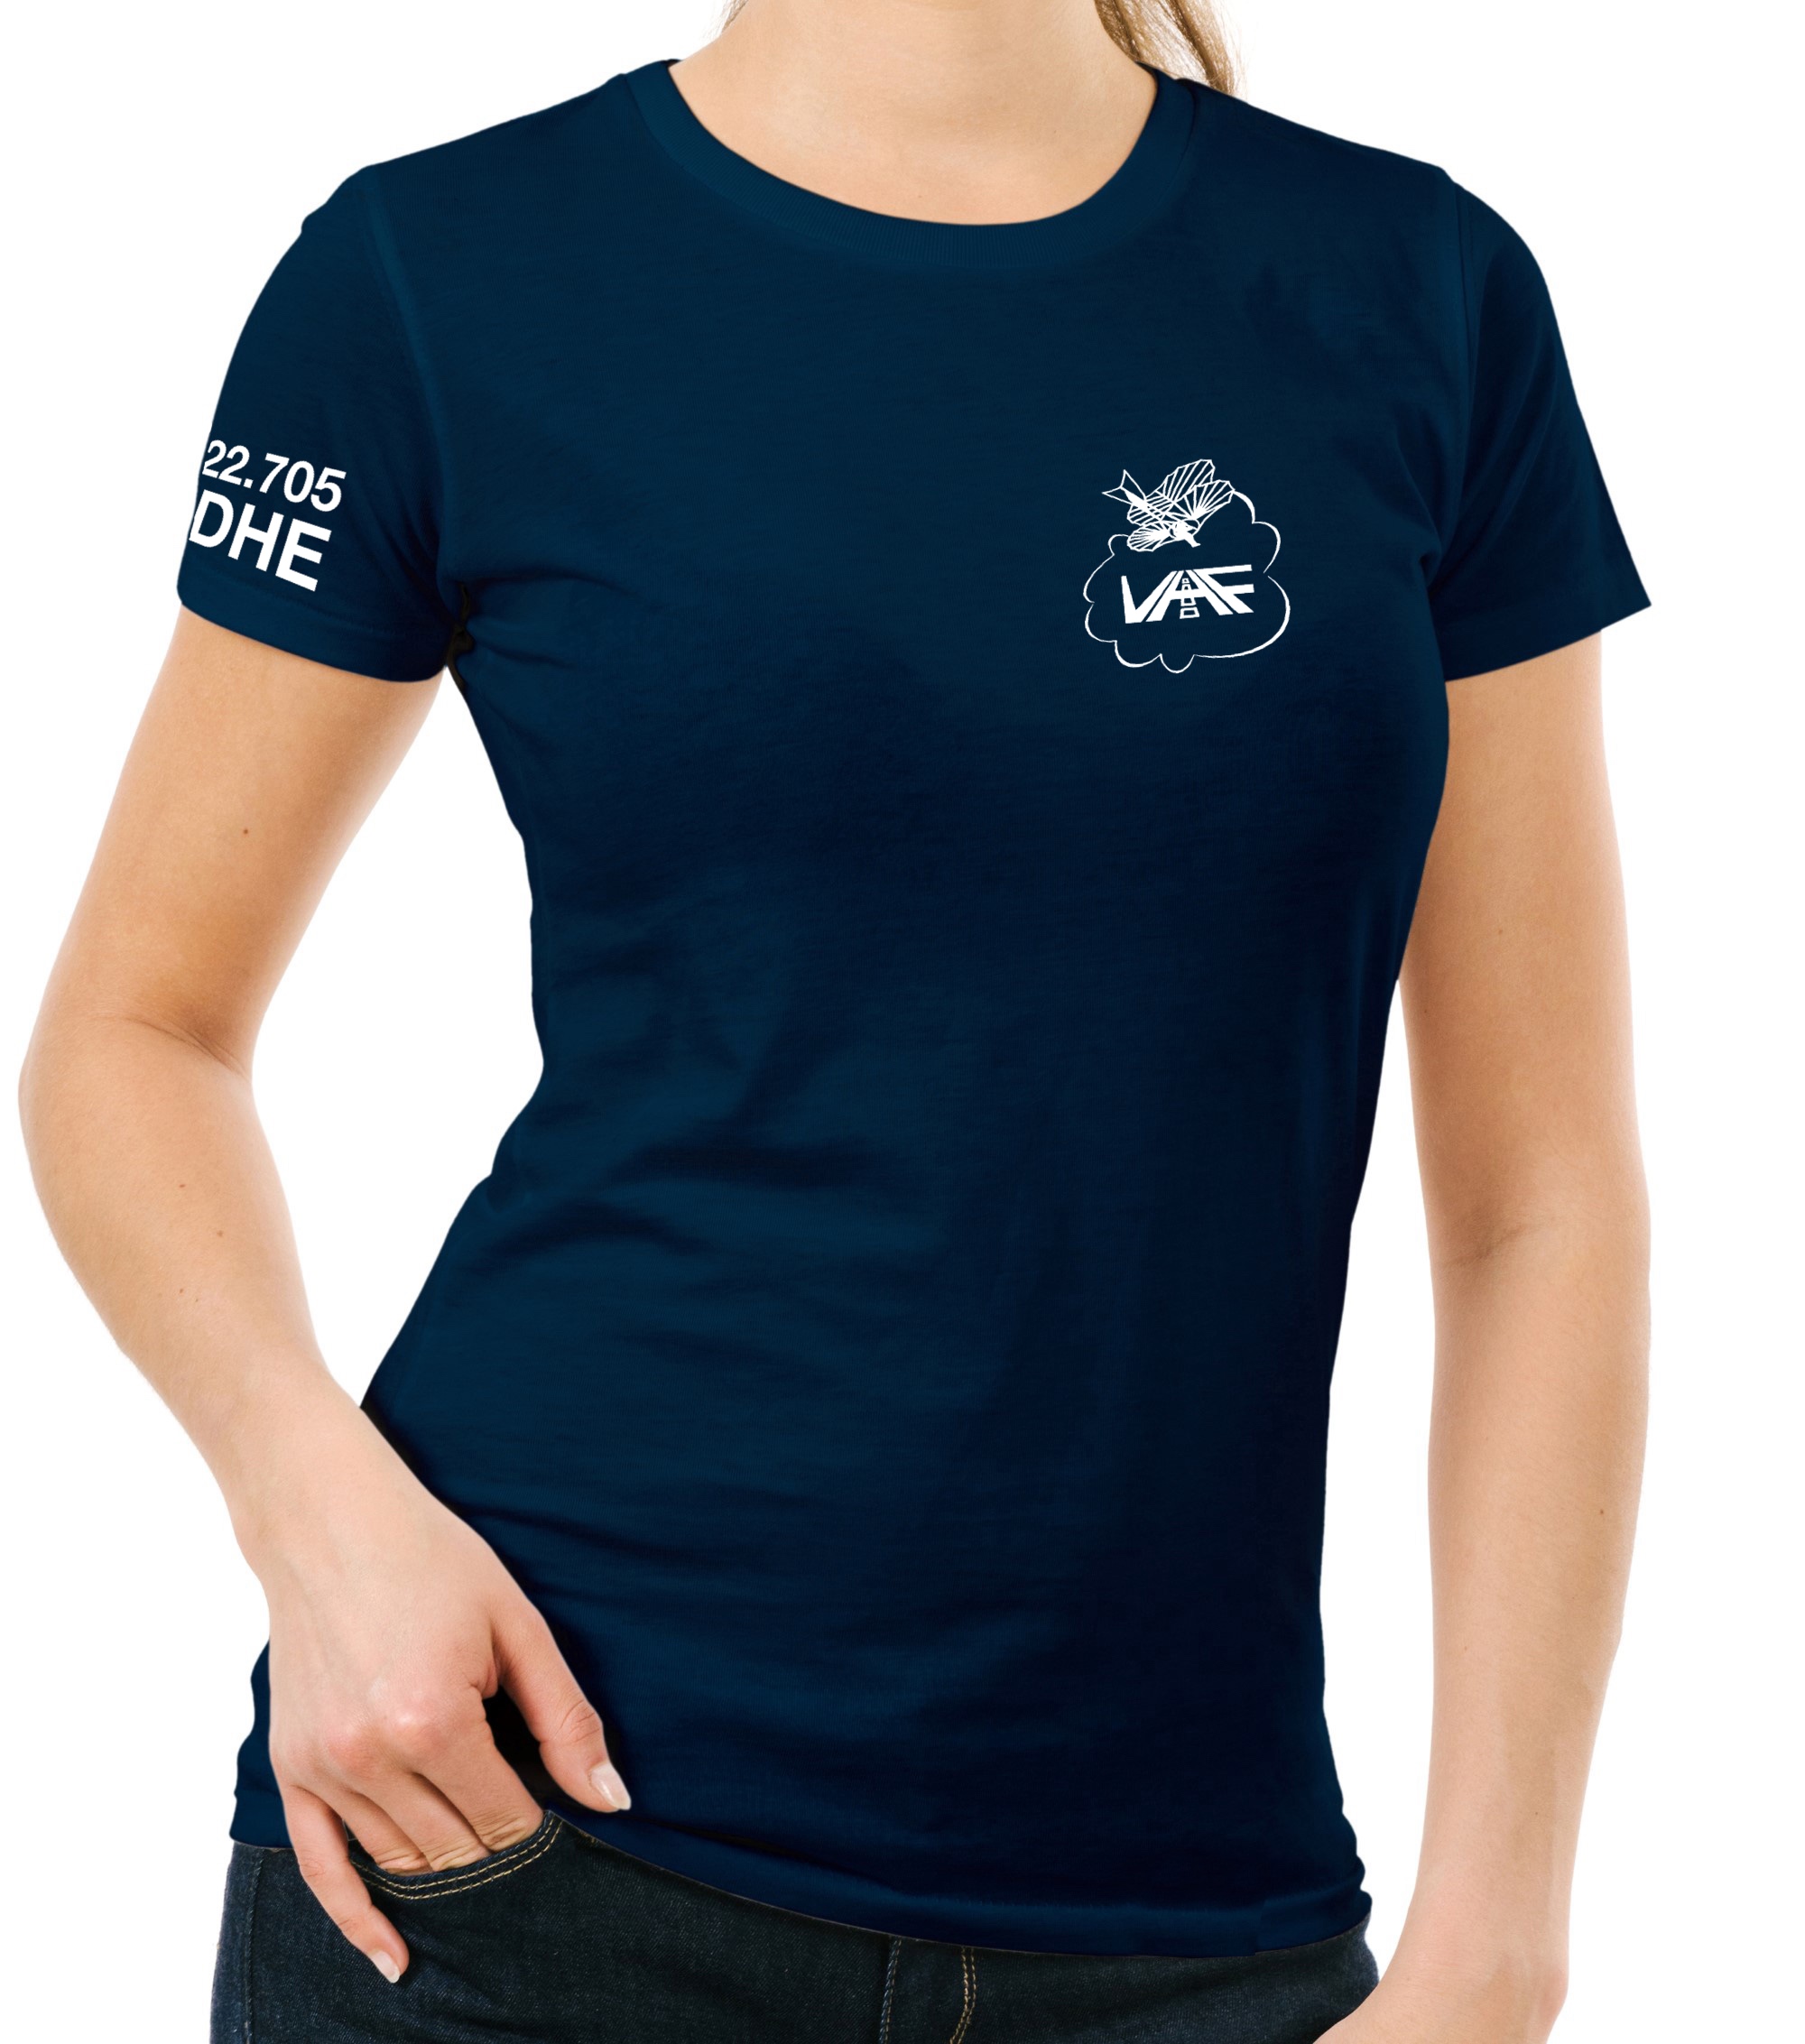 Damen T-Shirt VHF e.V. Lilienthal